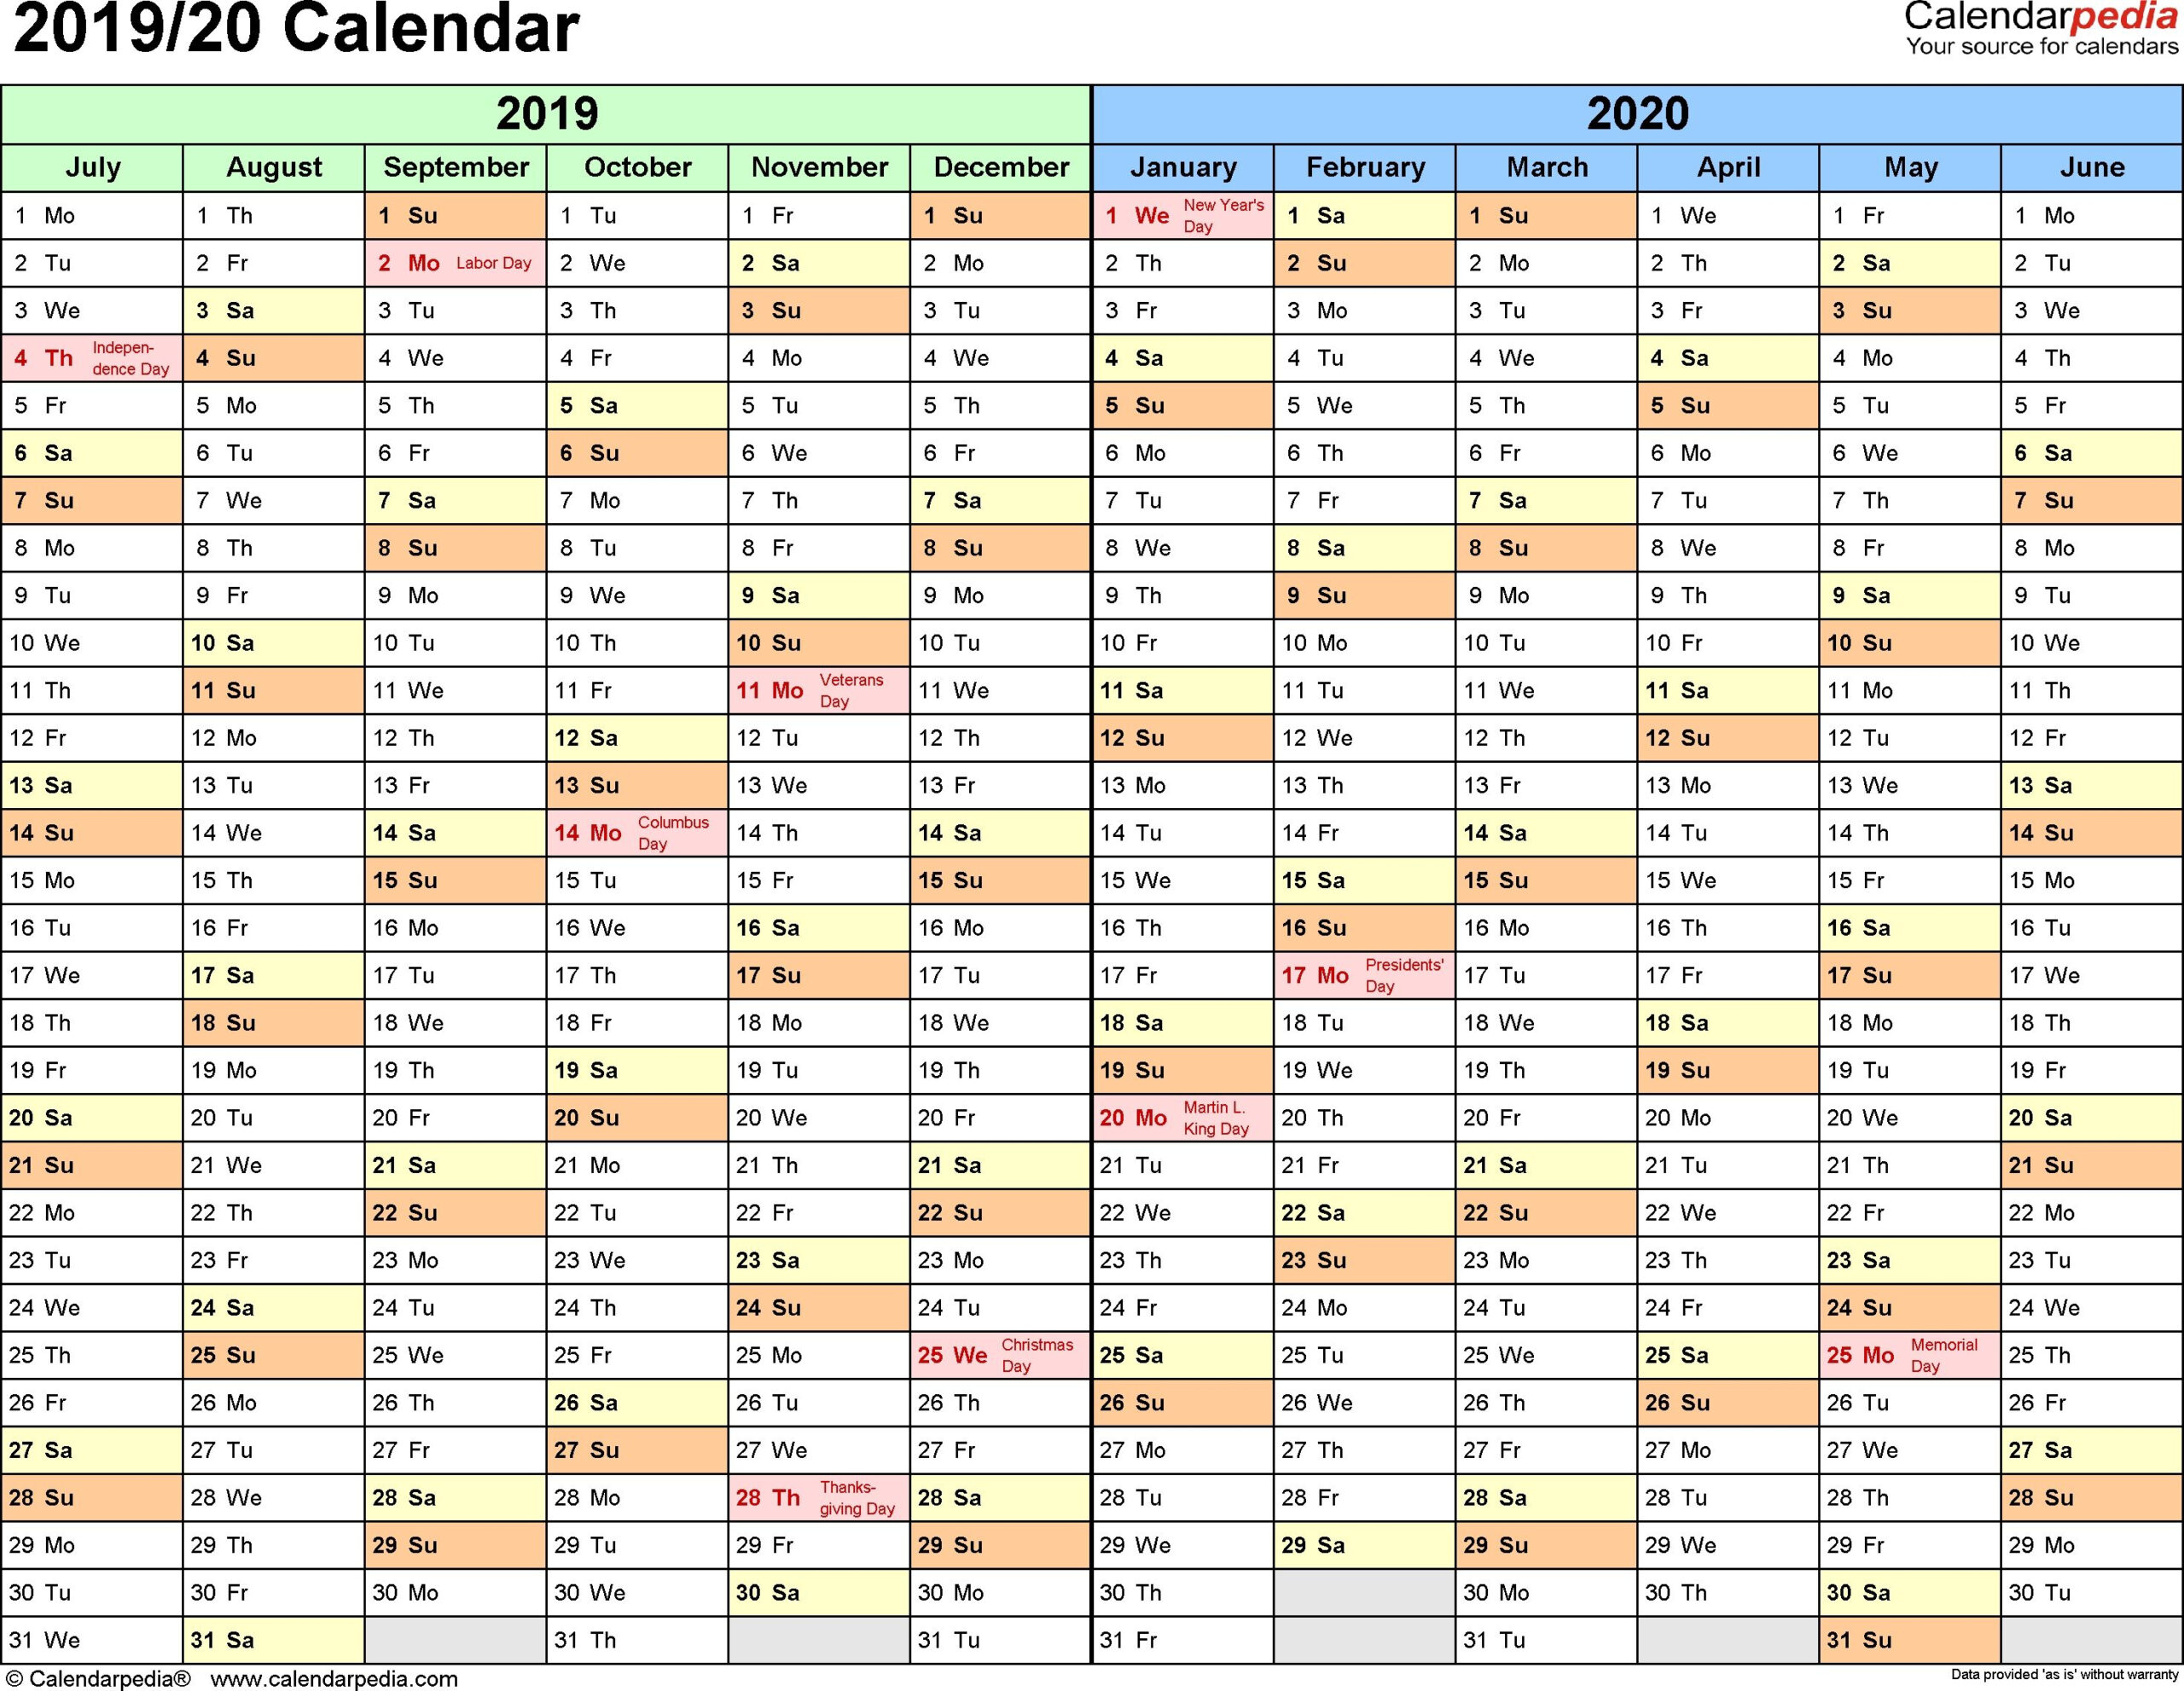 Financial Week Calendar 2019 2020 In 2020 | Calendar